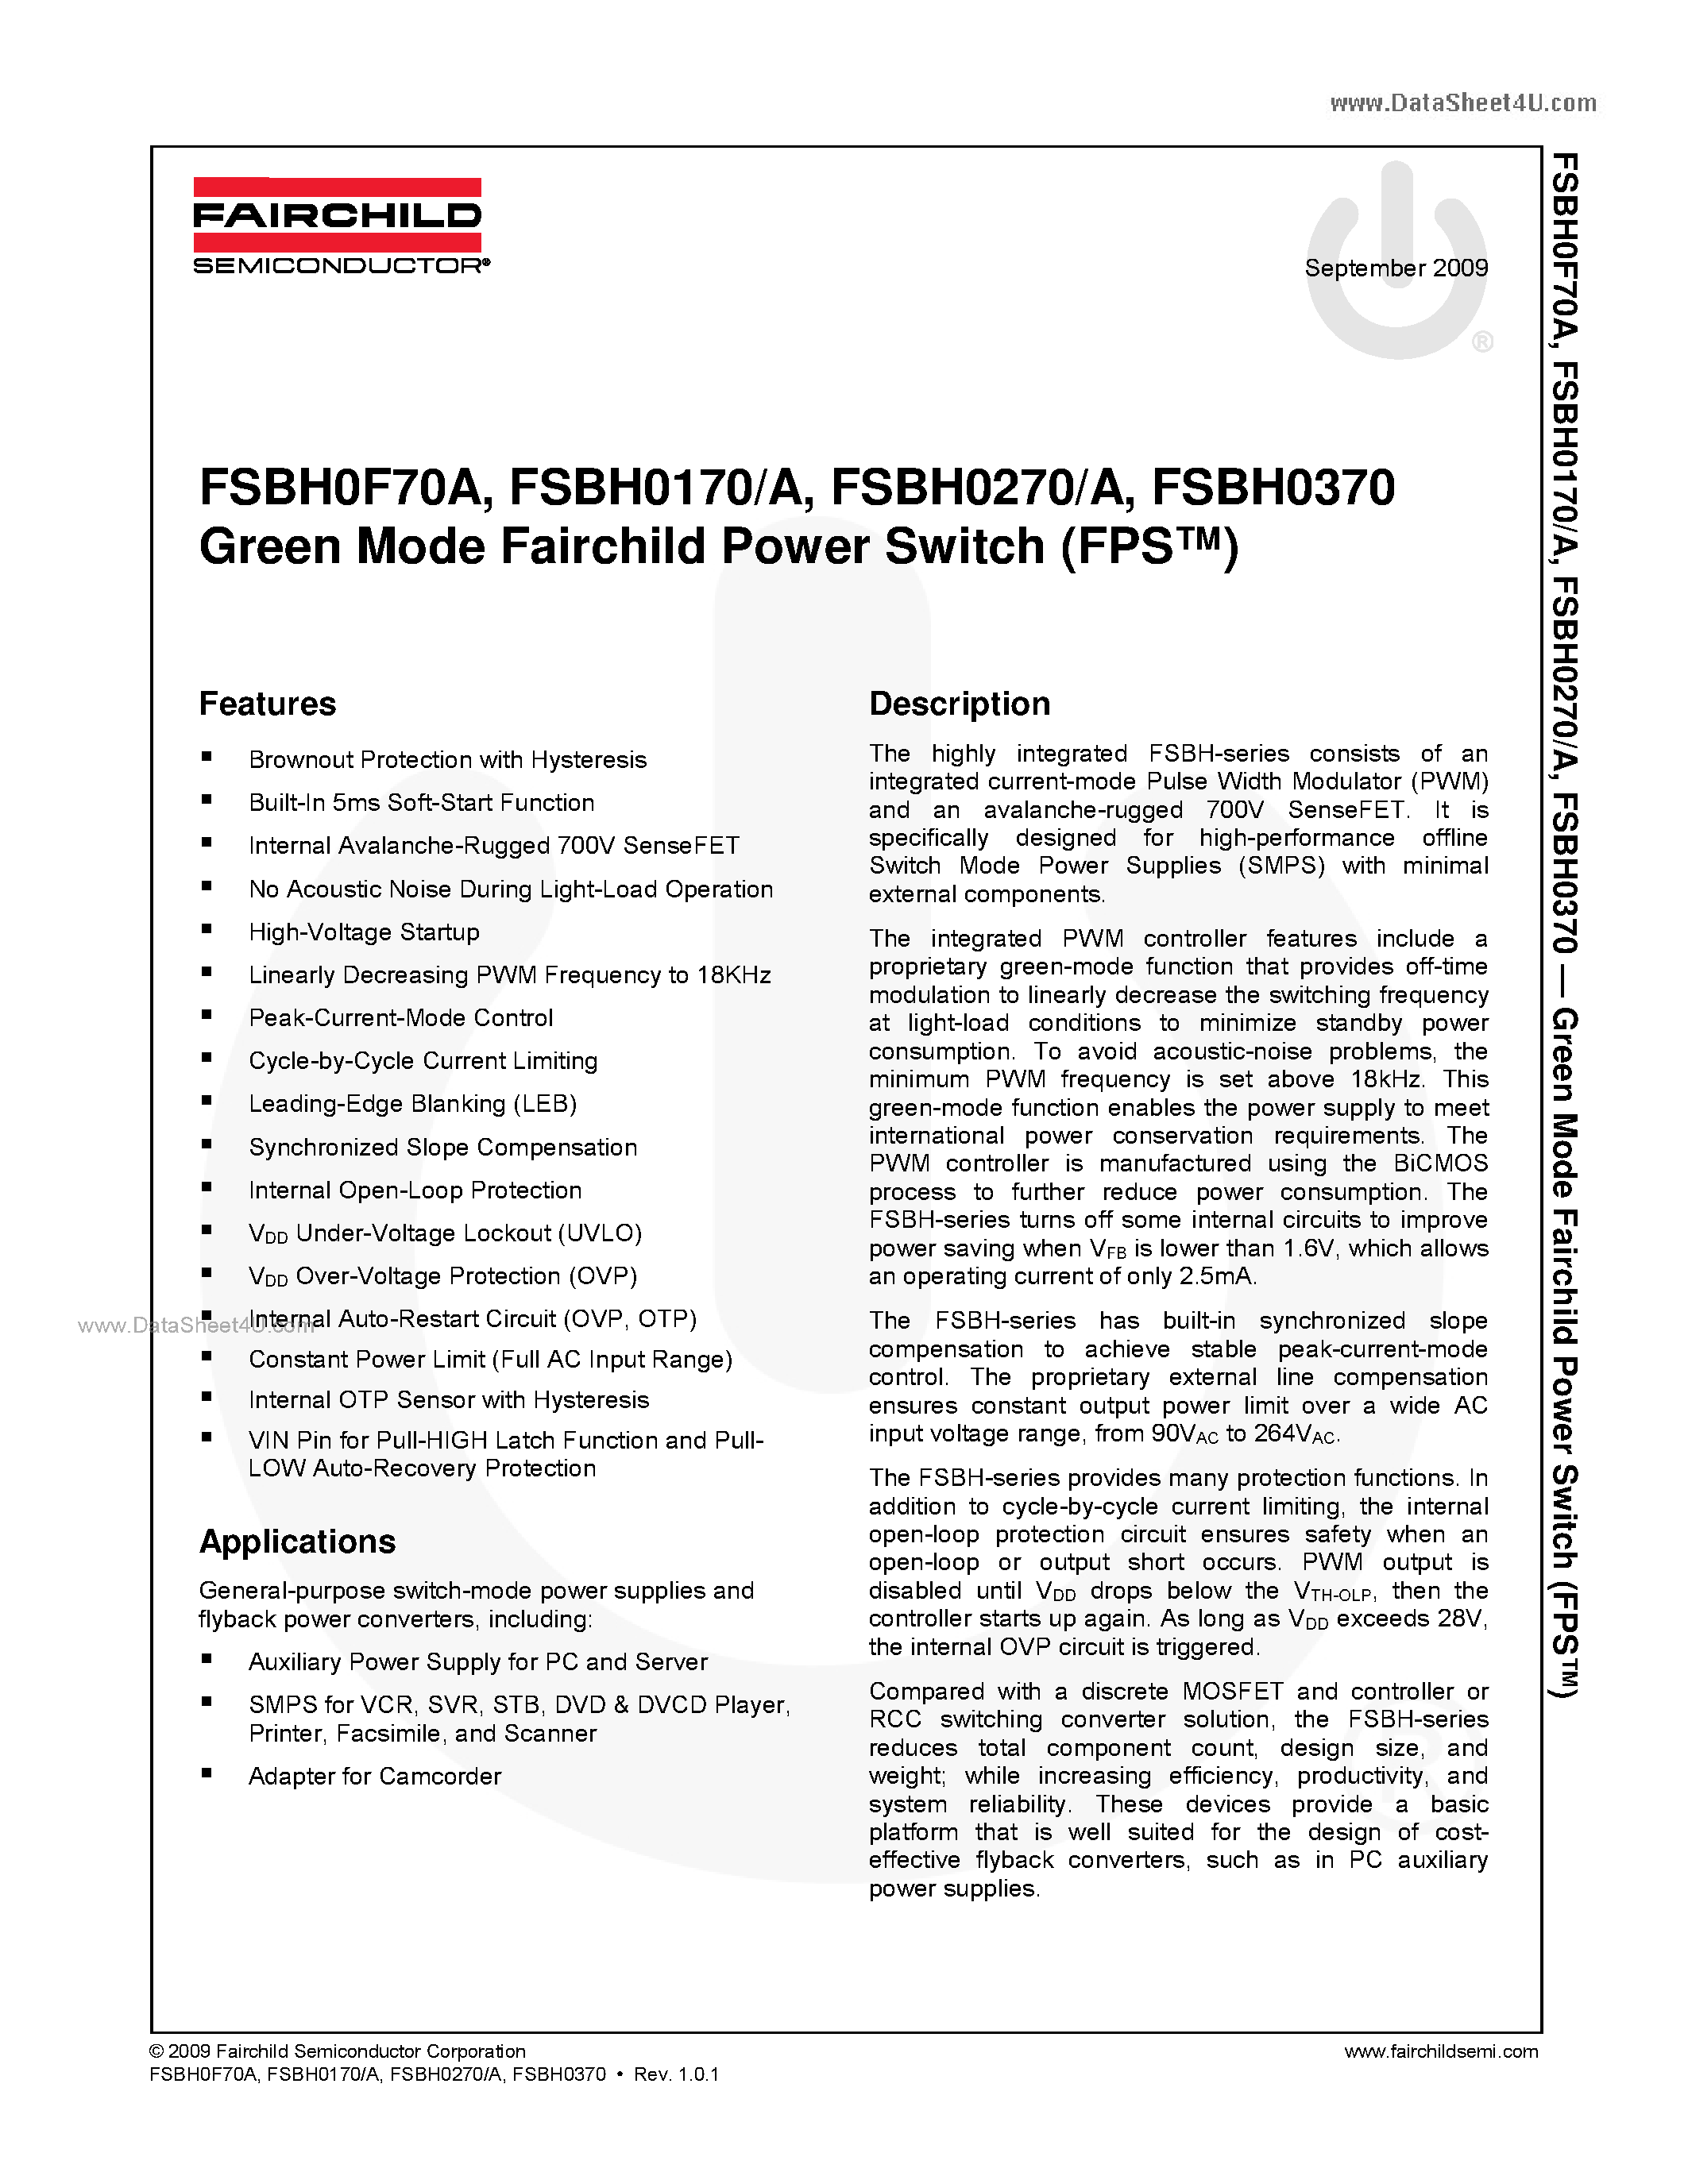 Даташит FSBH0170 - Green Mode Fairchild Power Switch страница 1